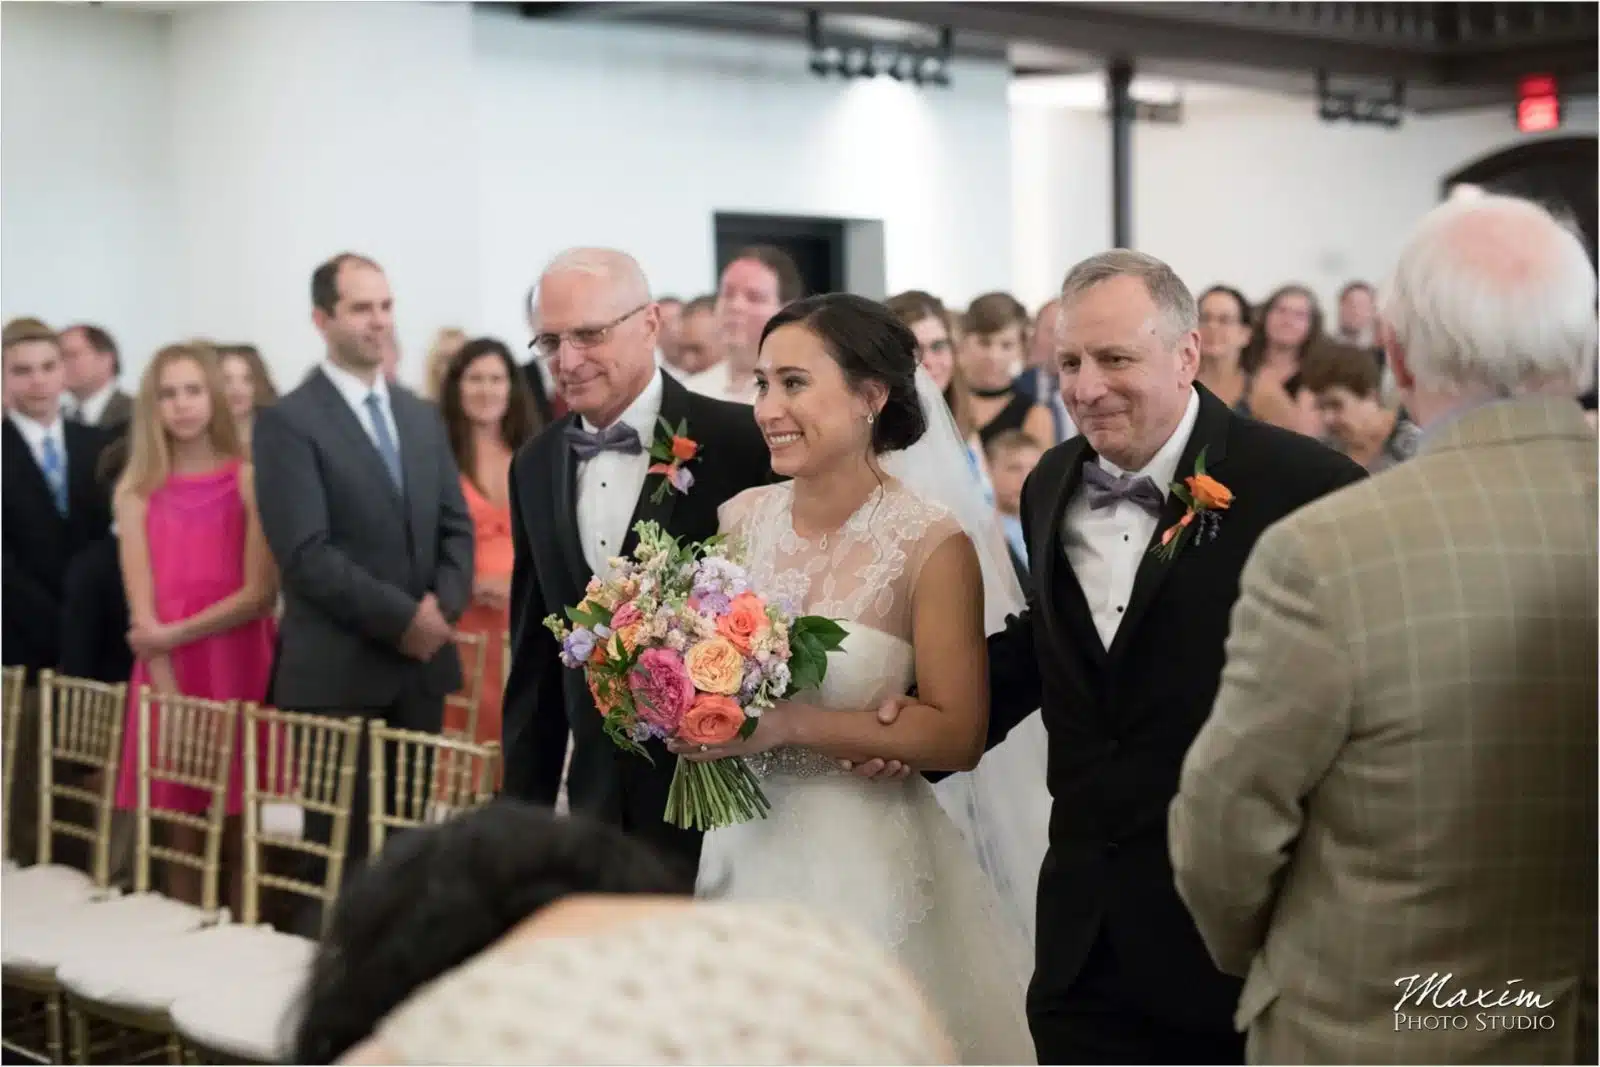 The Transept Cincinnati Wedding pictures